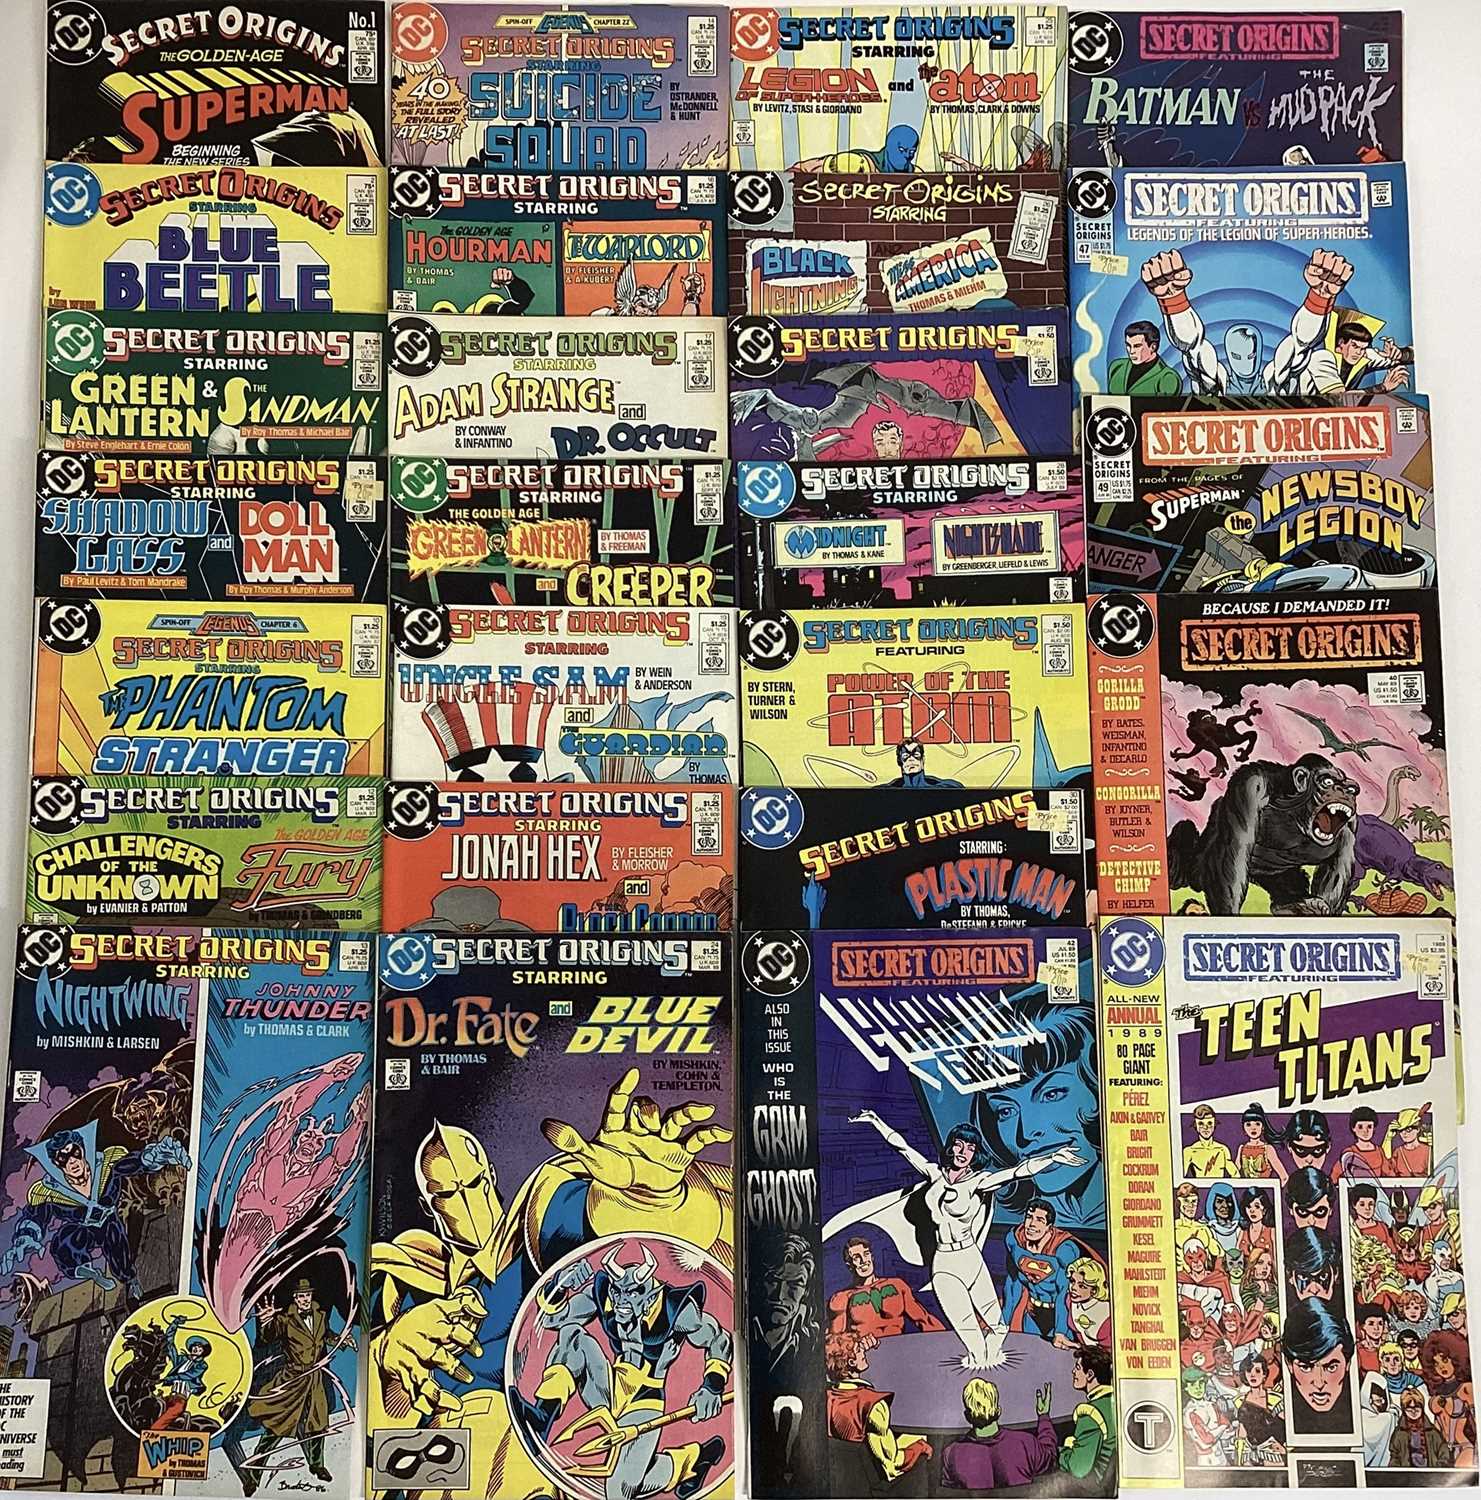 Lot 36 - Quantity of DC Comics 1980's and 90's, Secret Origins #1 #2 #7 #8 #10 #12 #13 #14 #16 #17 #18 #19 #21 #24 #25 #26 #27 #28 #29 #30 #40 #42 #44 #47 #49 together with Secret Origins Annual 1989 #3